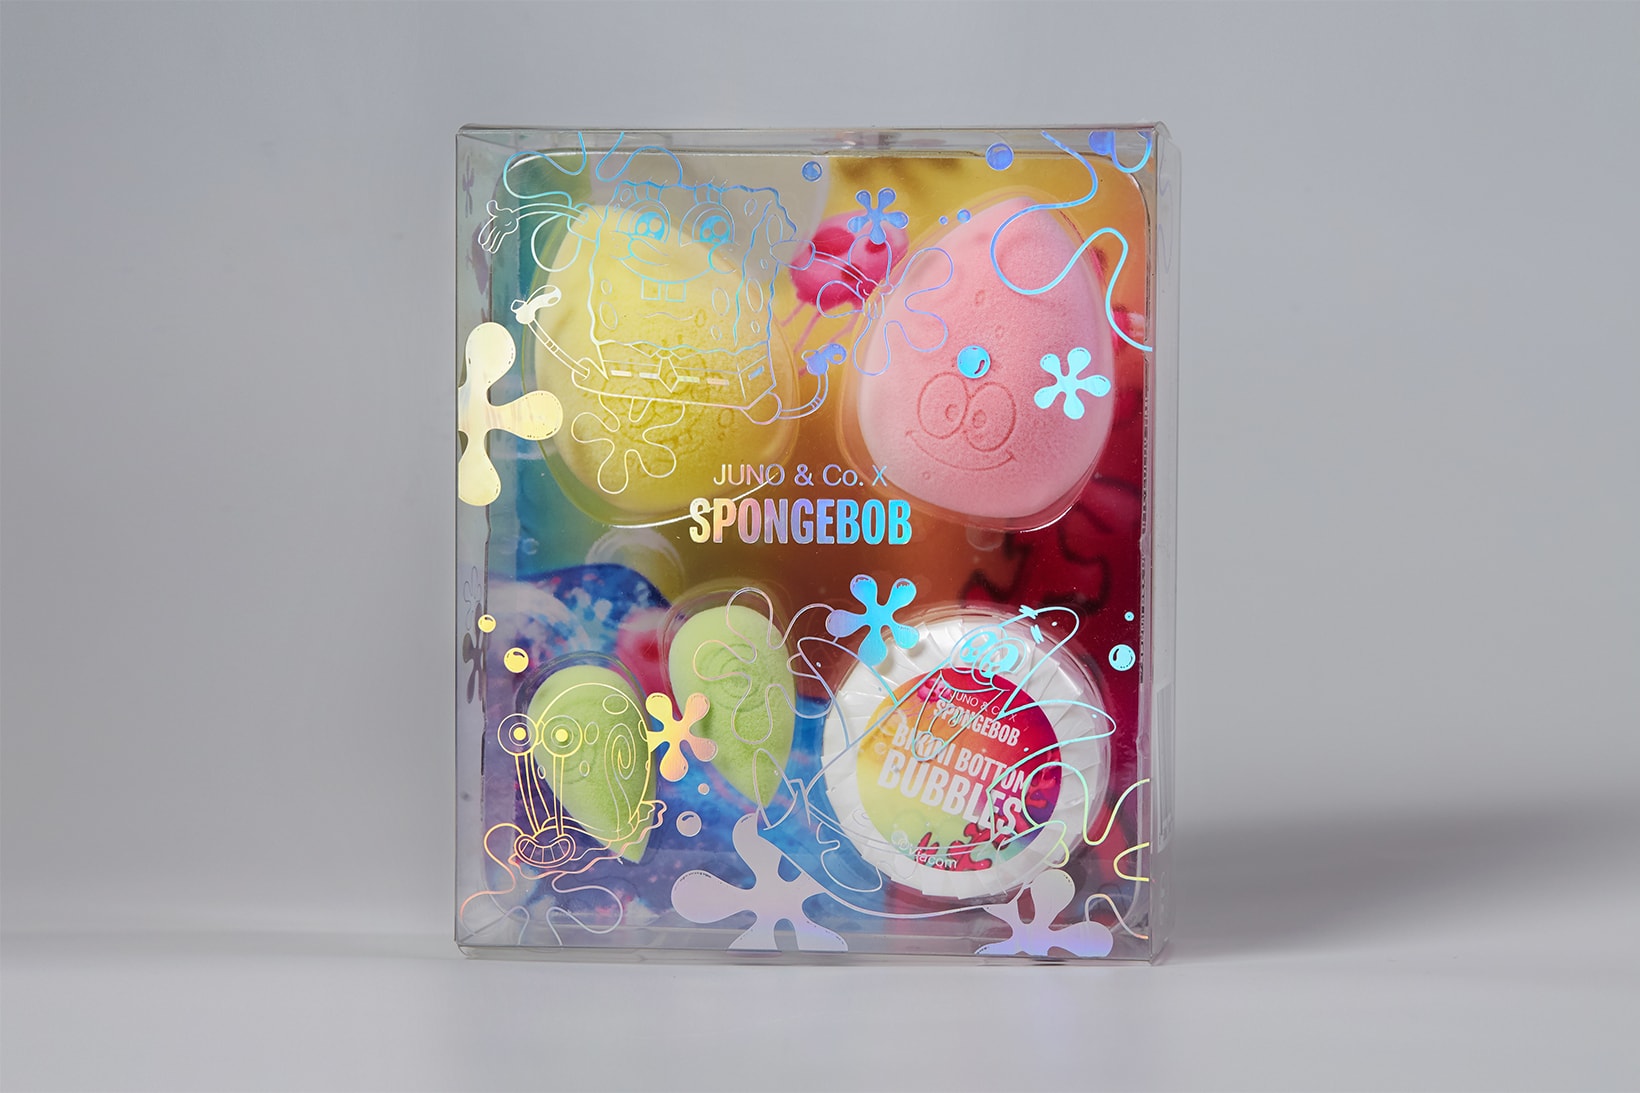 juno and co spongebob squarepants collaboration microfiber sponge beauty blender soap bar patrick star gary